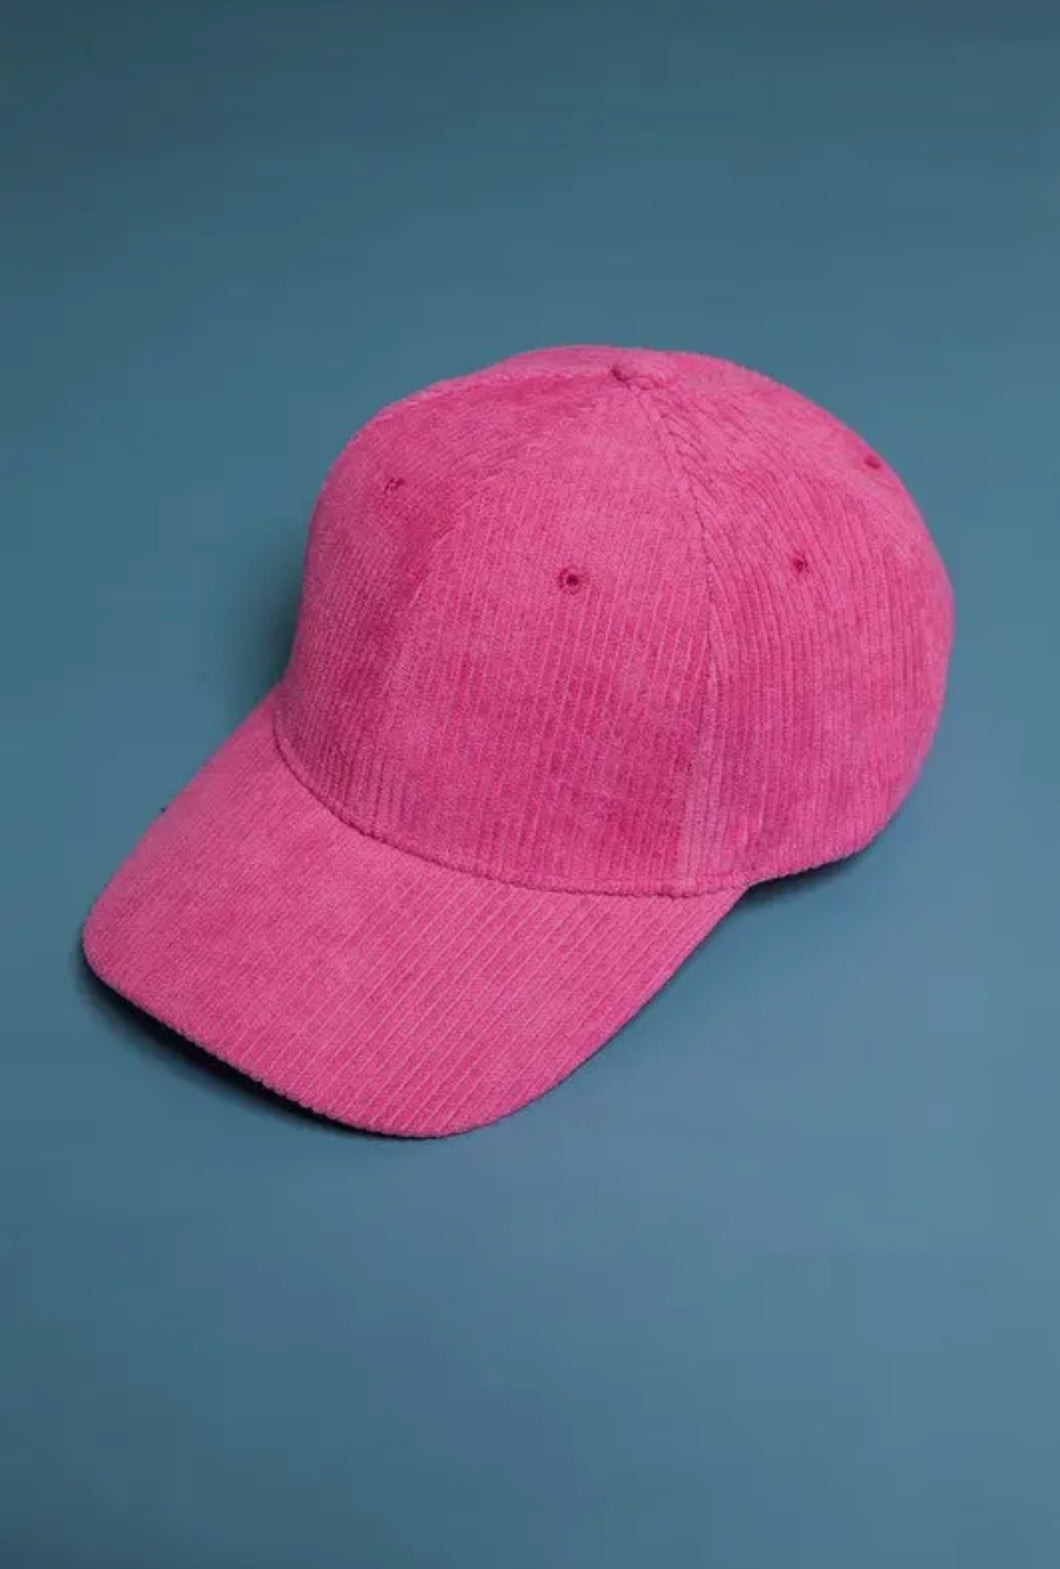 Hot pink corduroy baseball cap